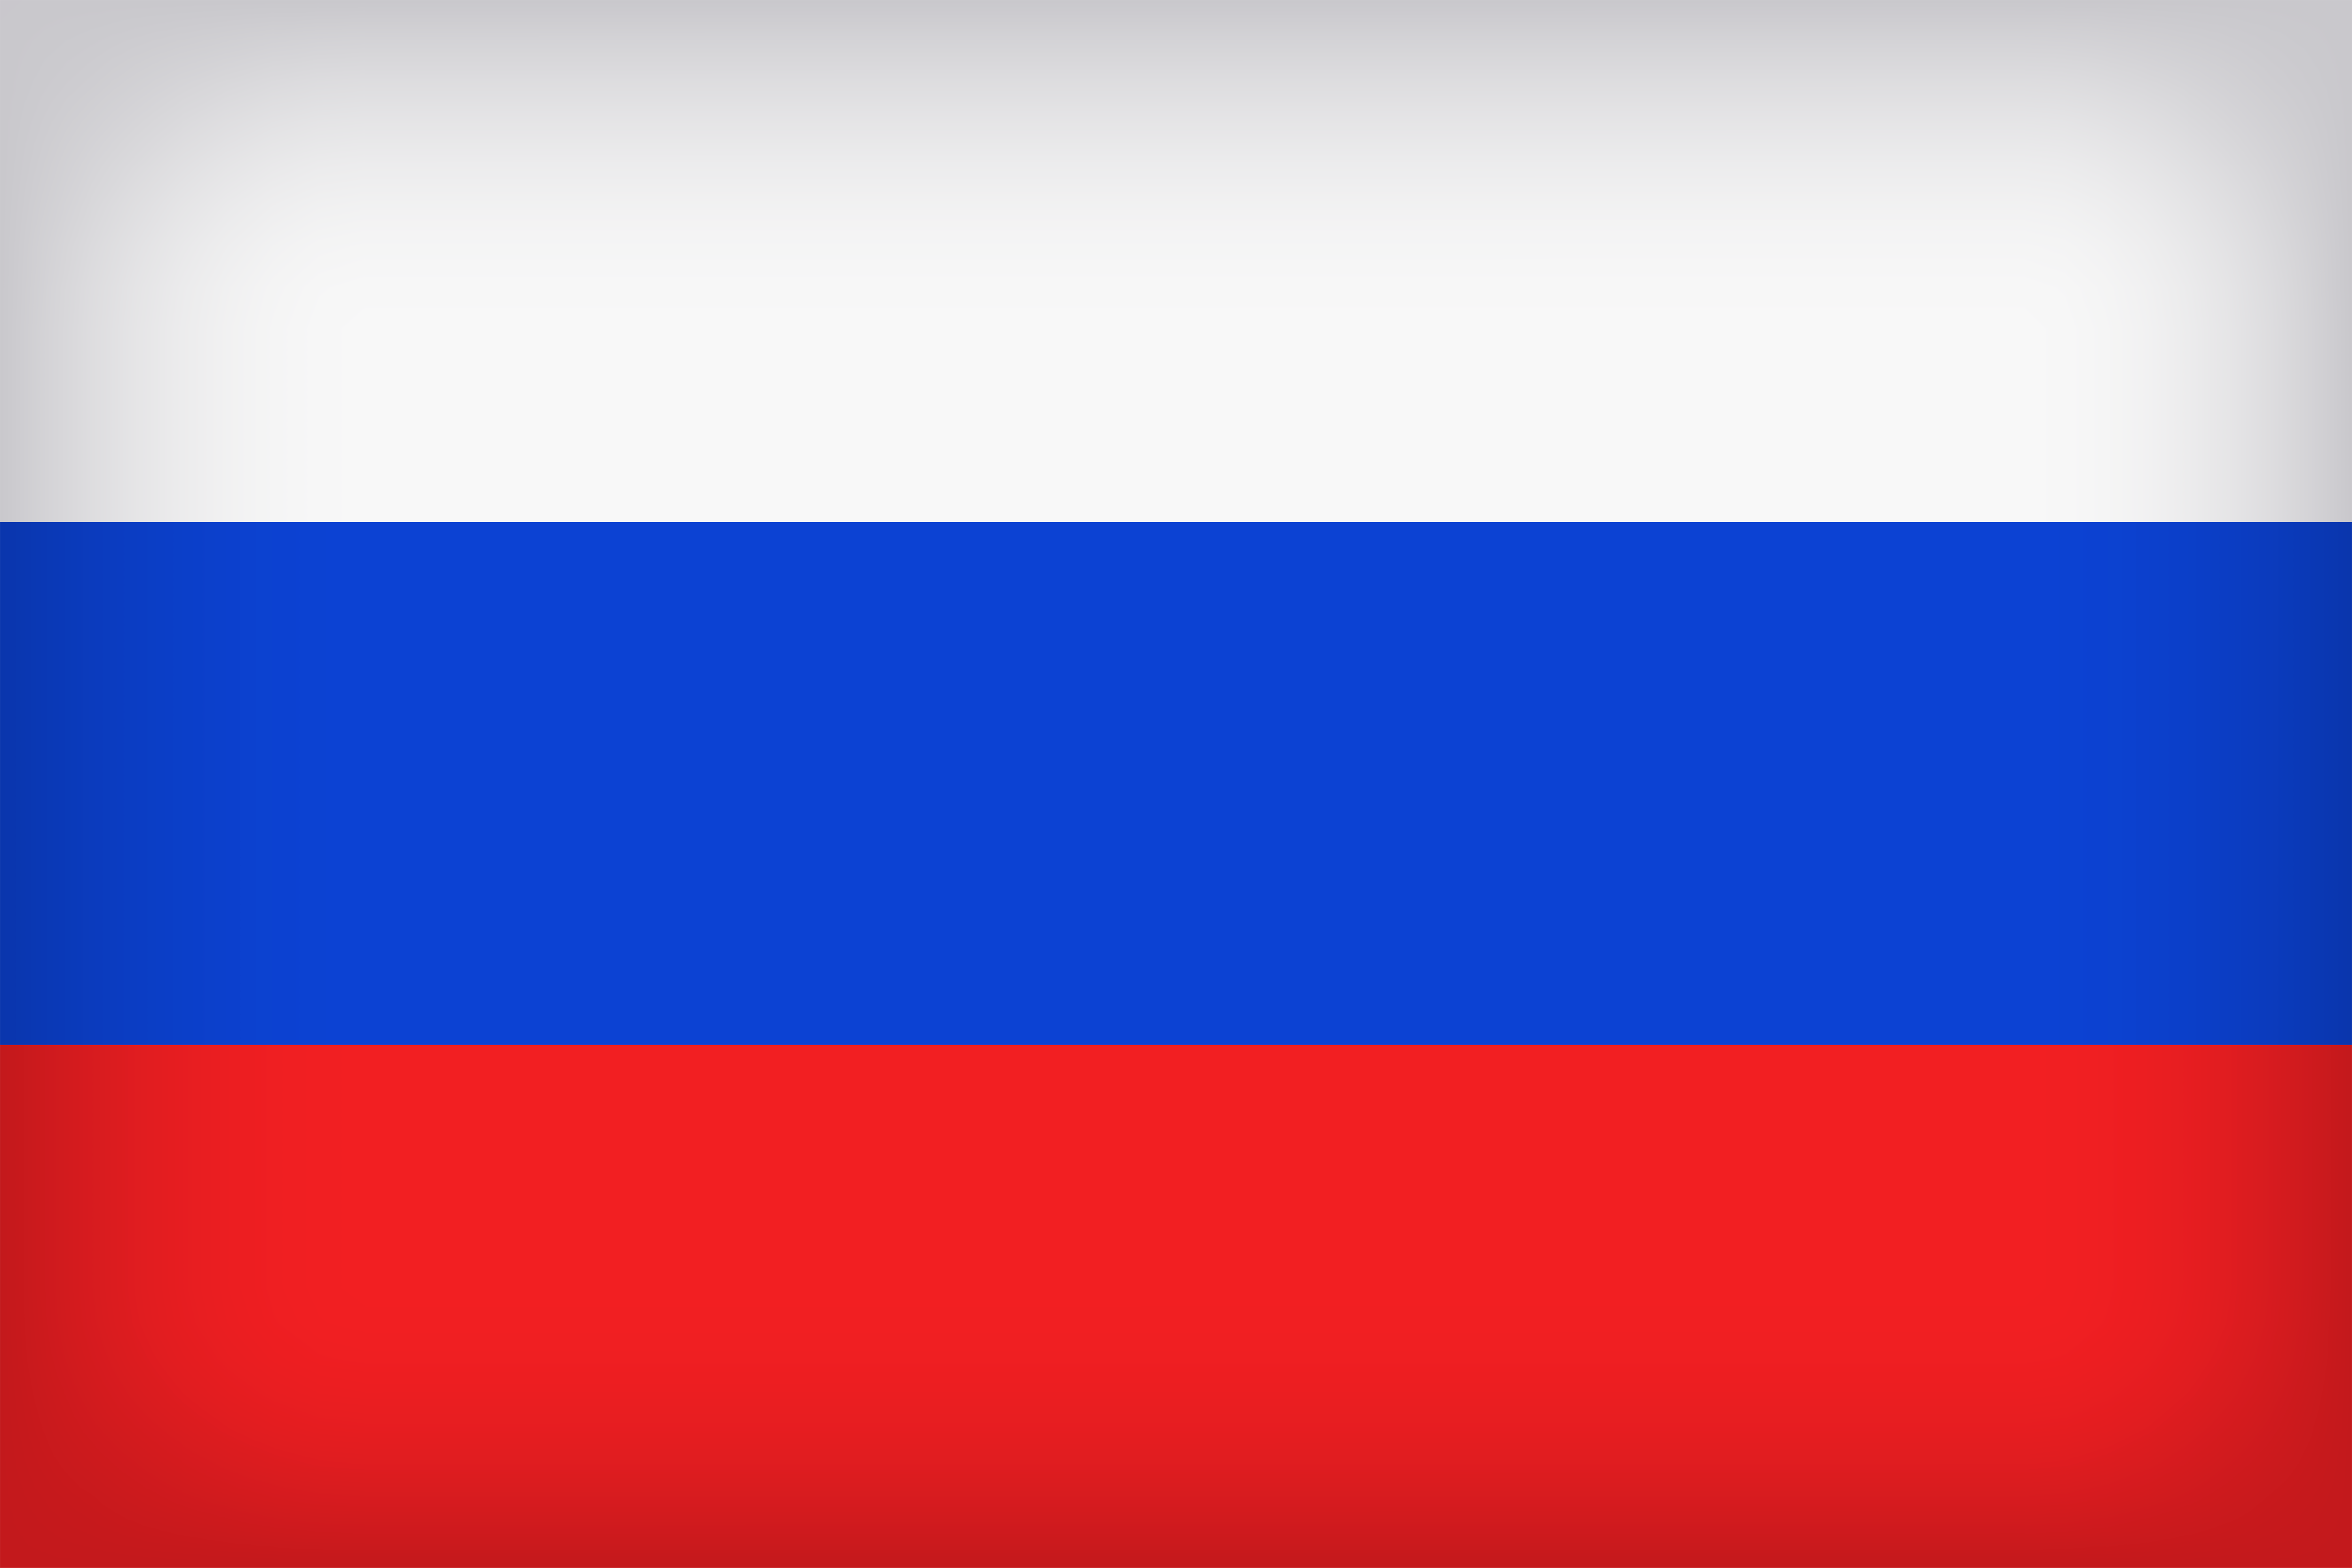 Russia Flag PNG Clip Art - Best WEB Clipart